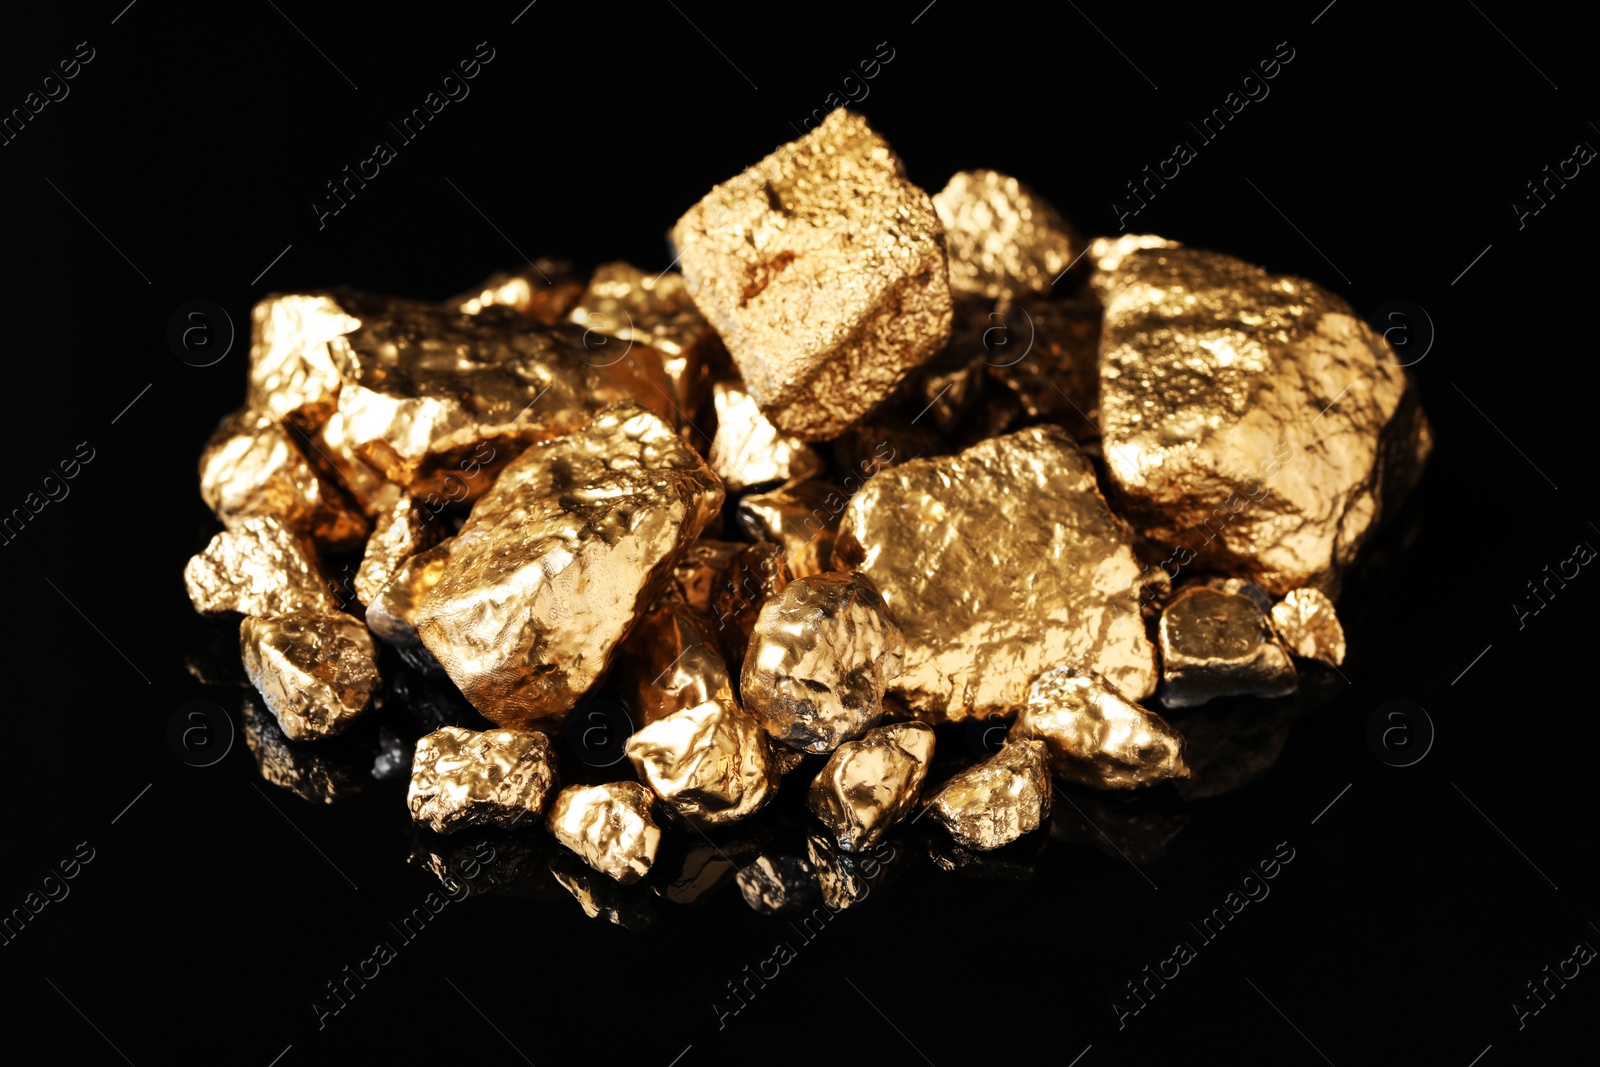 Photo of Pile of shiny gold nuggets on black background